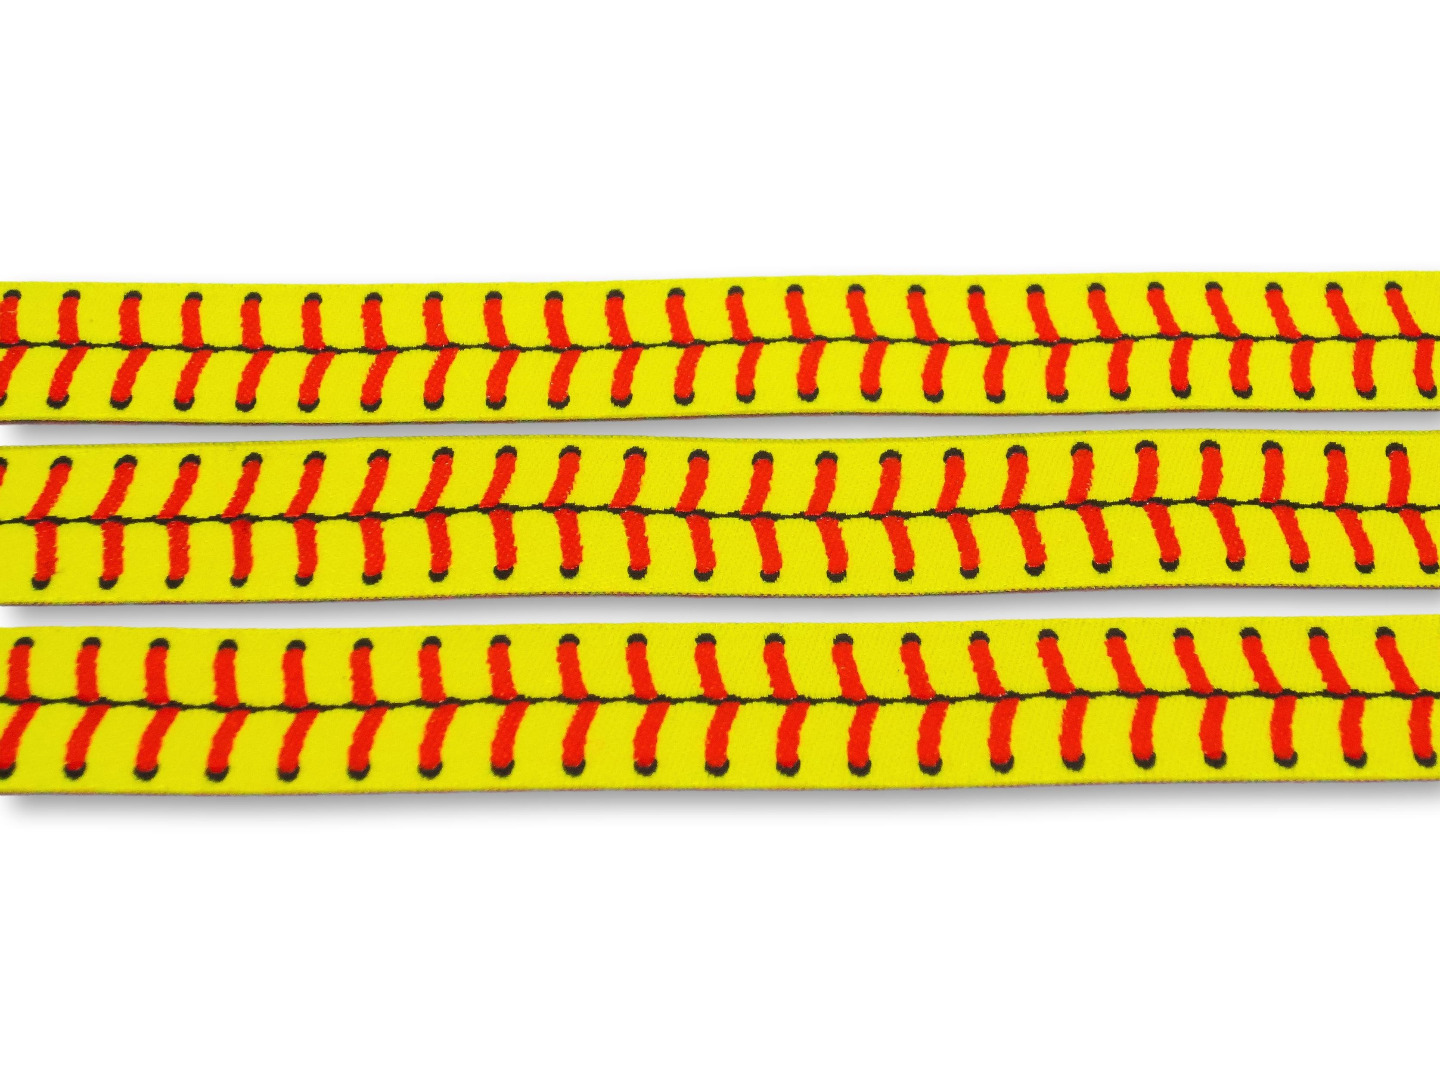 Softball Webband - Softballnaht - gelb mit roter Naht